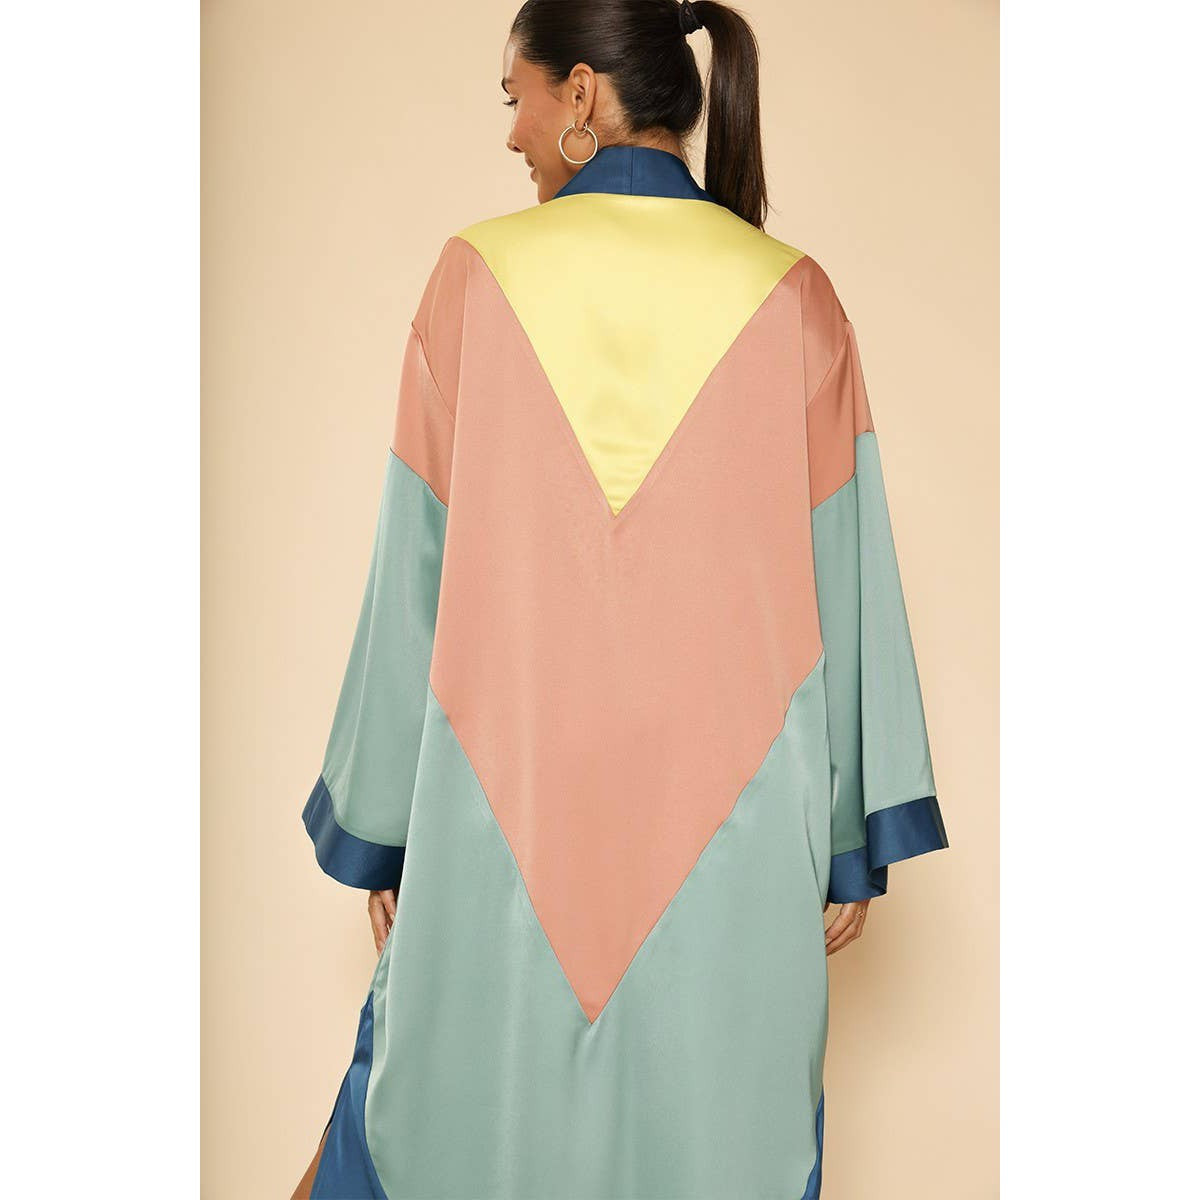 Miss Sparkling Chevron Kimono Big Long Textured Satin Duster | Light Jacket, Outdoor Robe, Swimsuit Coverup | Sizes SM-XL